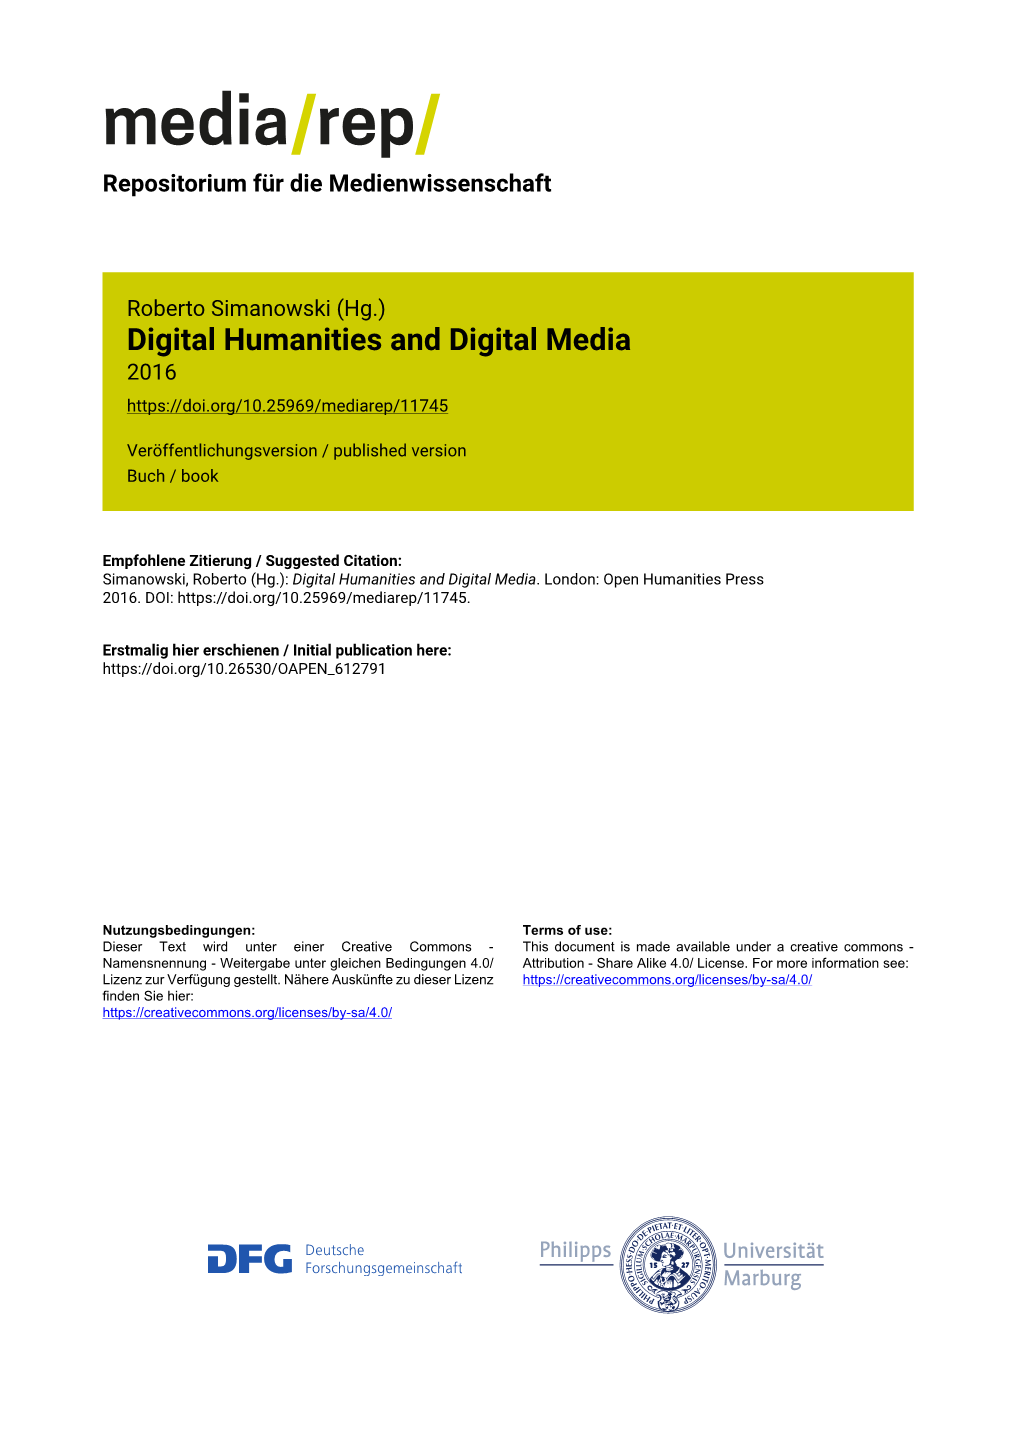 Digital Humanities and Digital Media 2016